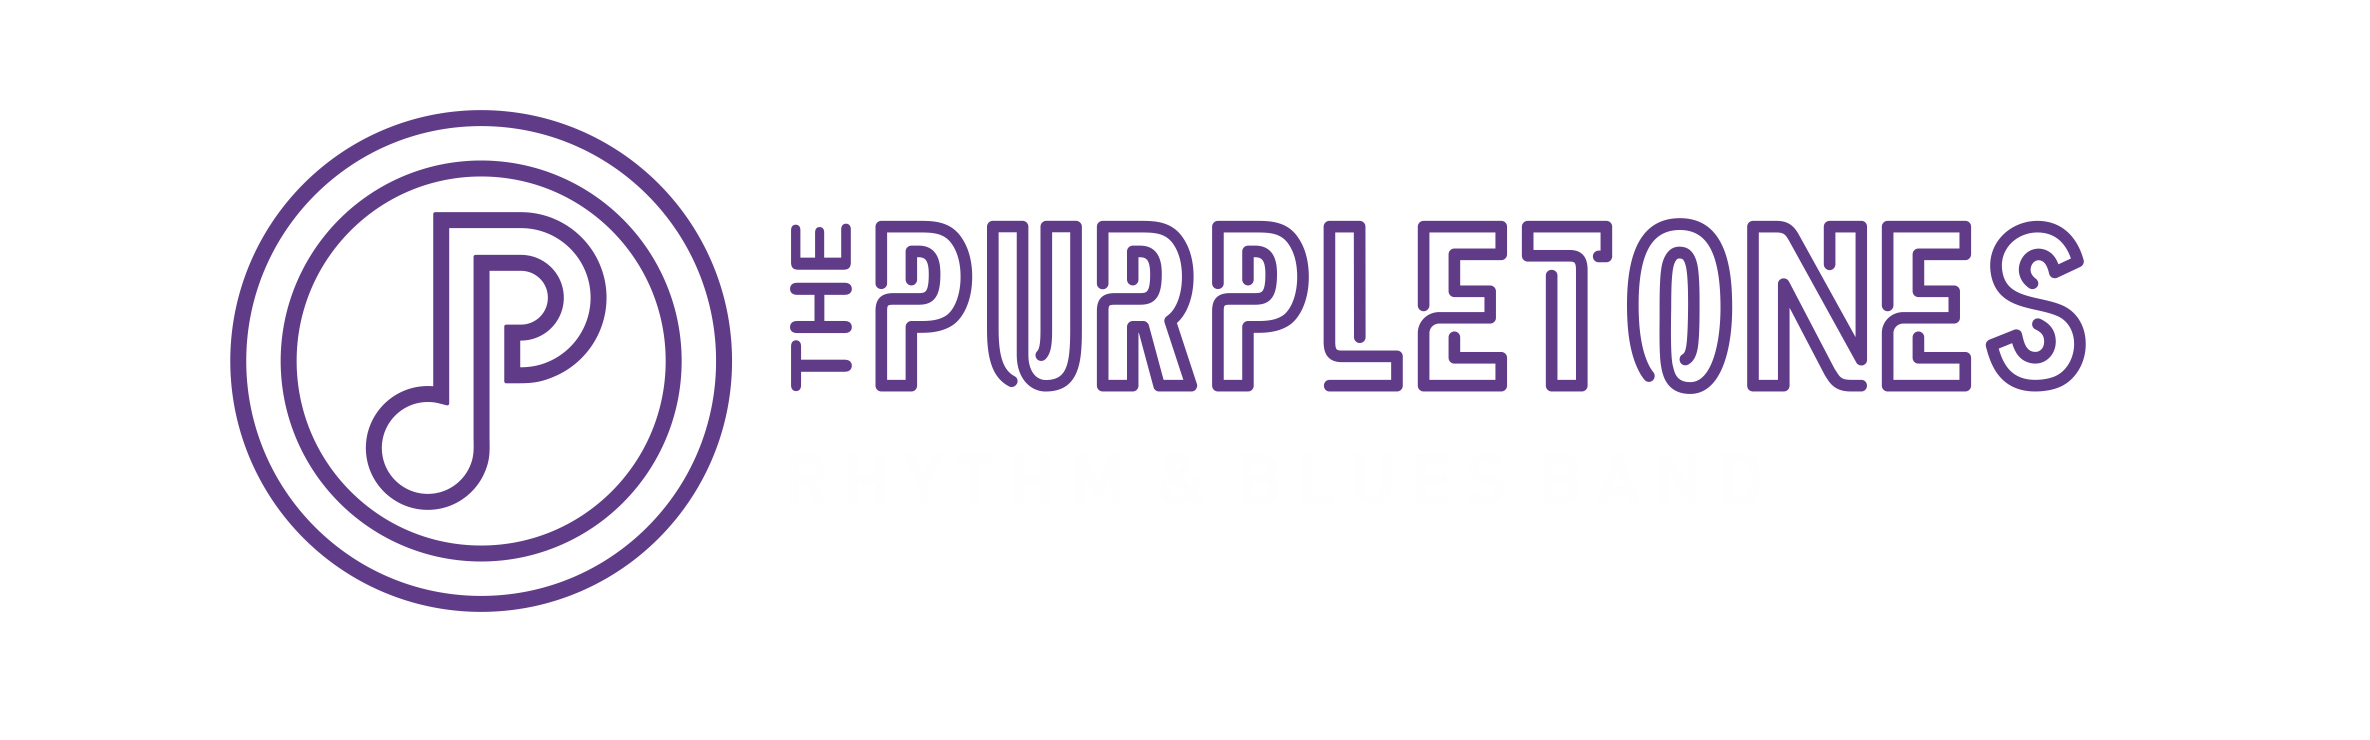 The Purpletones